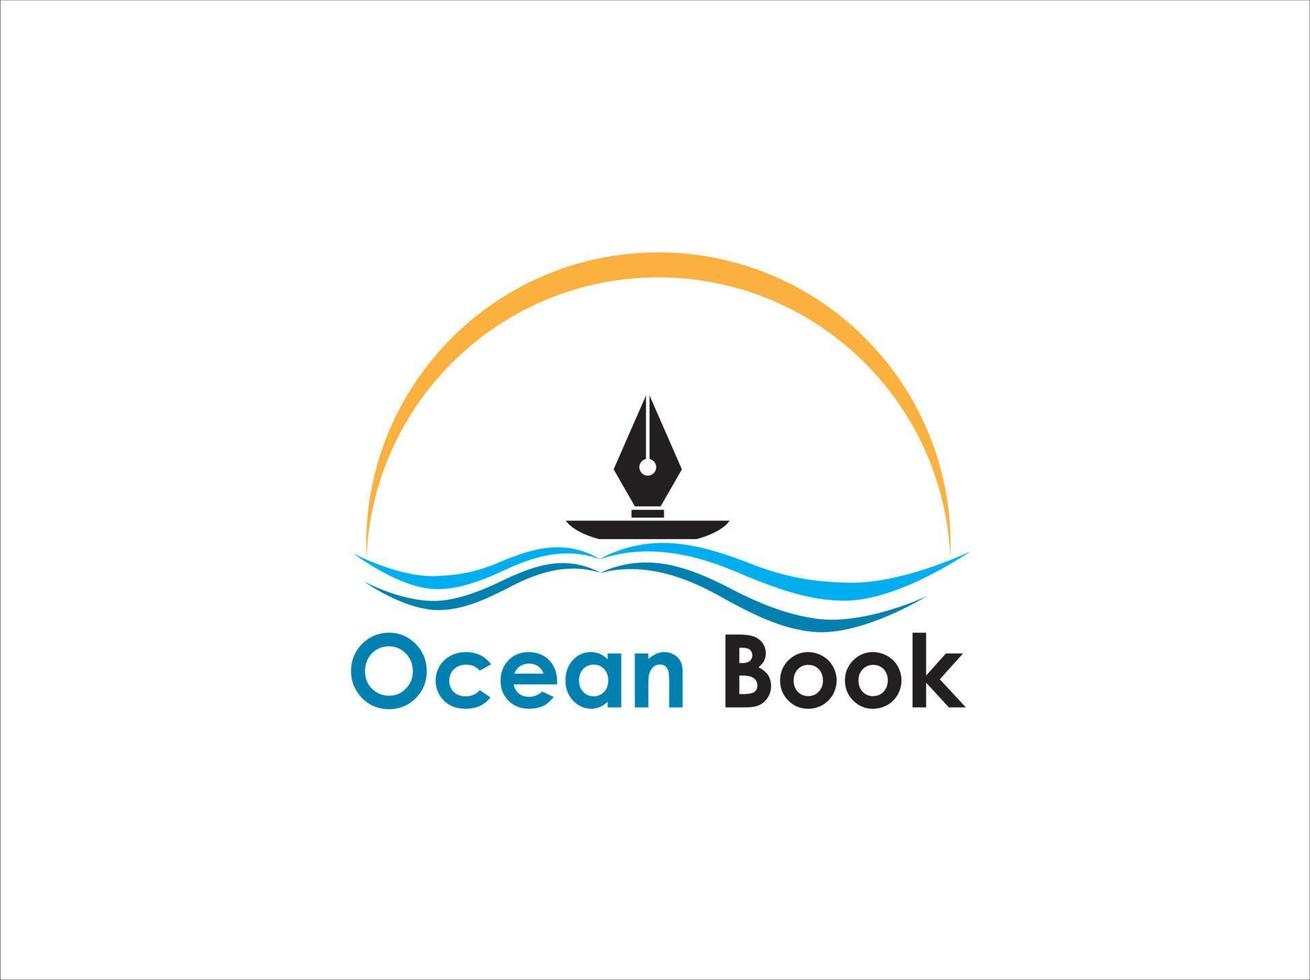 oceano libro logo vettore